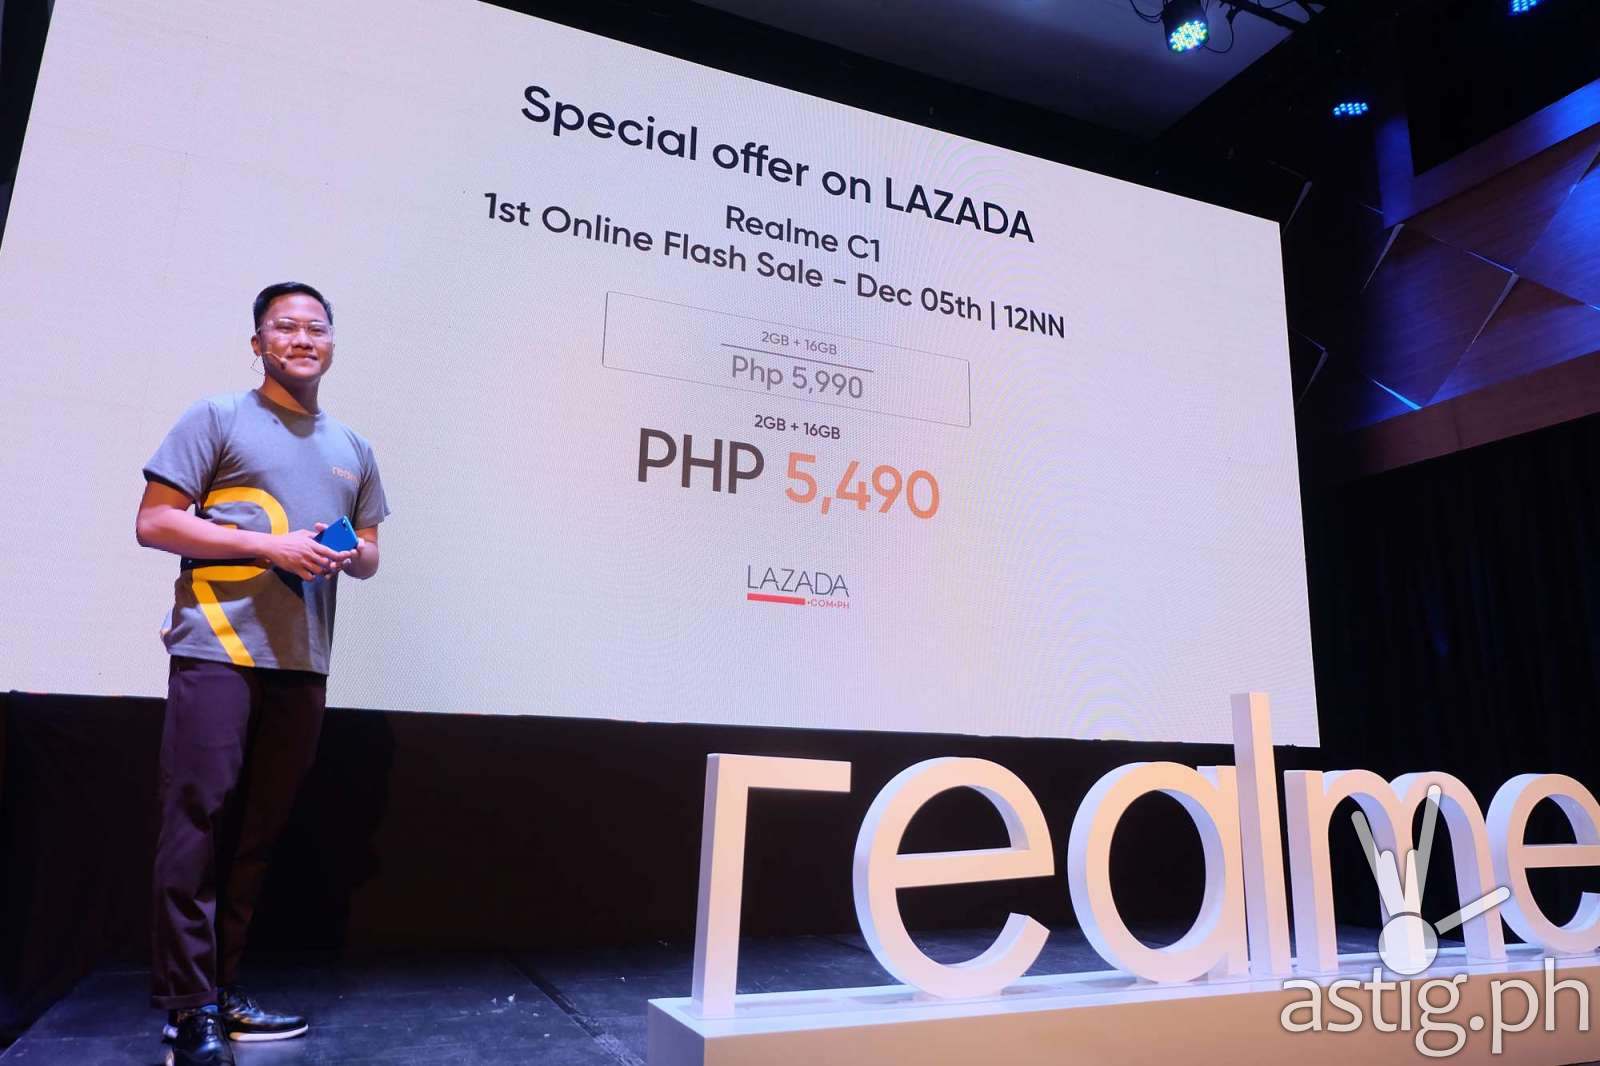 Eason de Guzman, PR Manager for Realme Philippines - Realme C1 Philippine launch